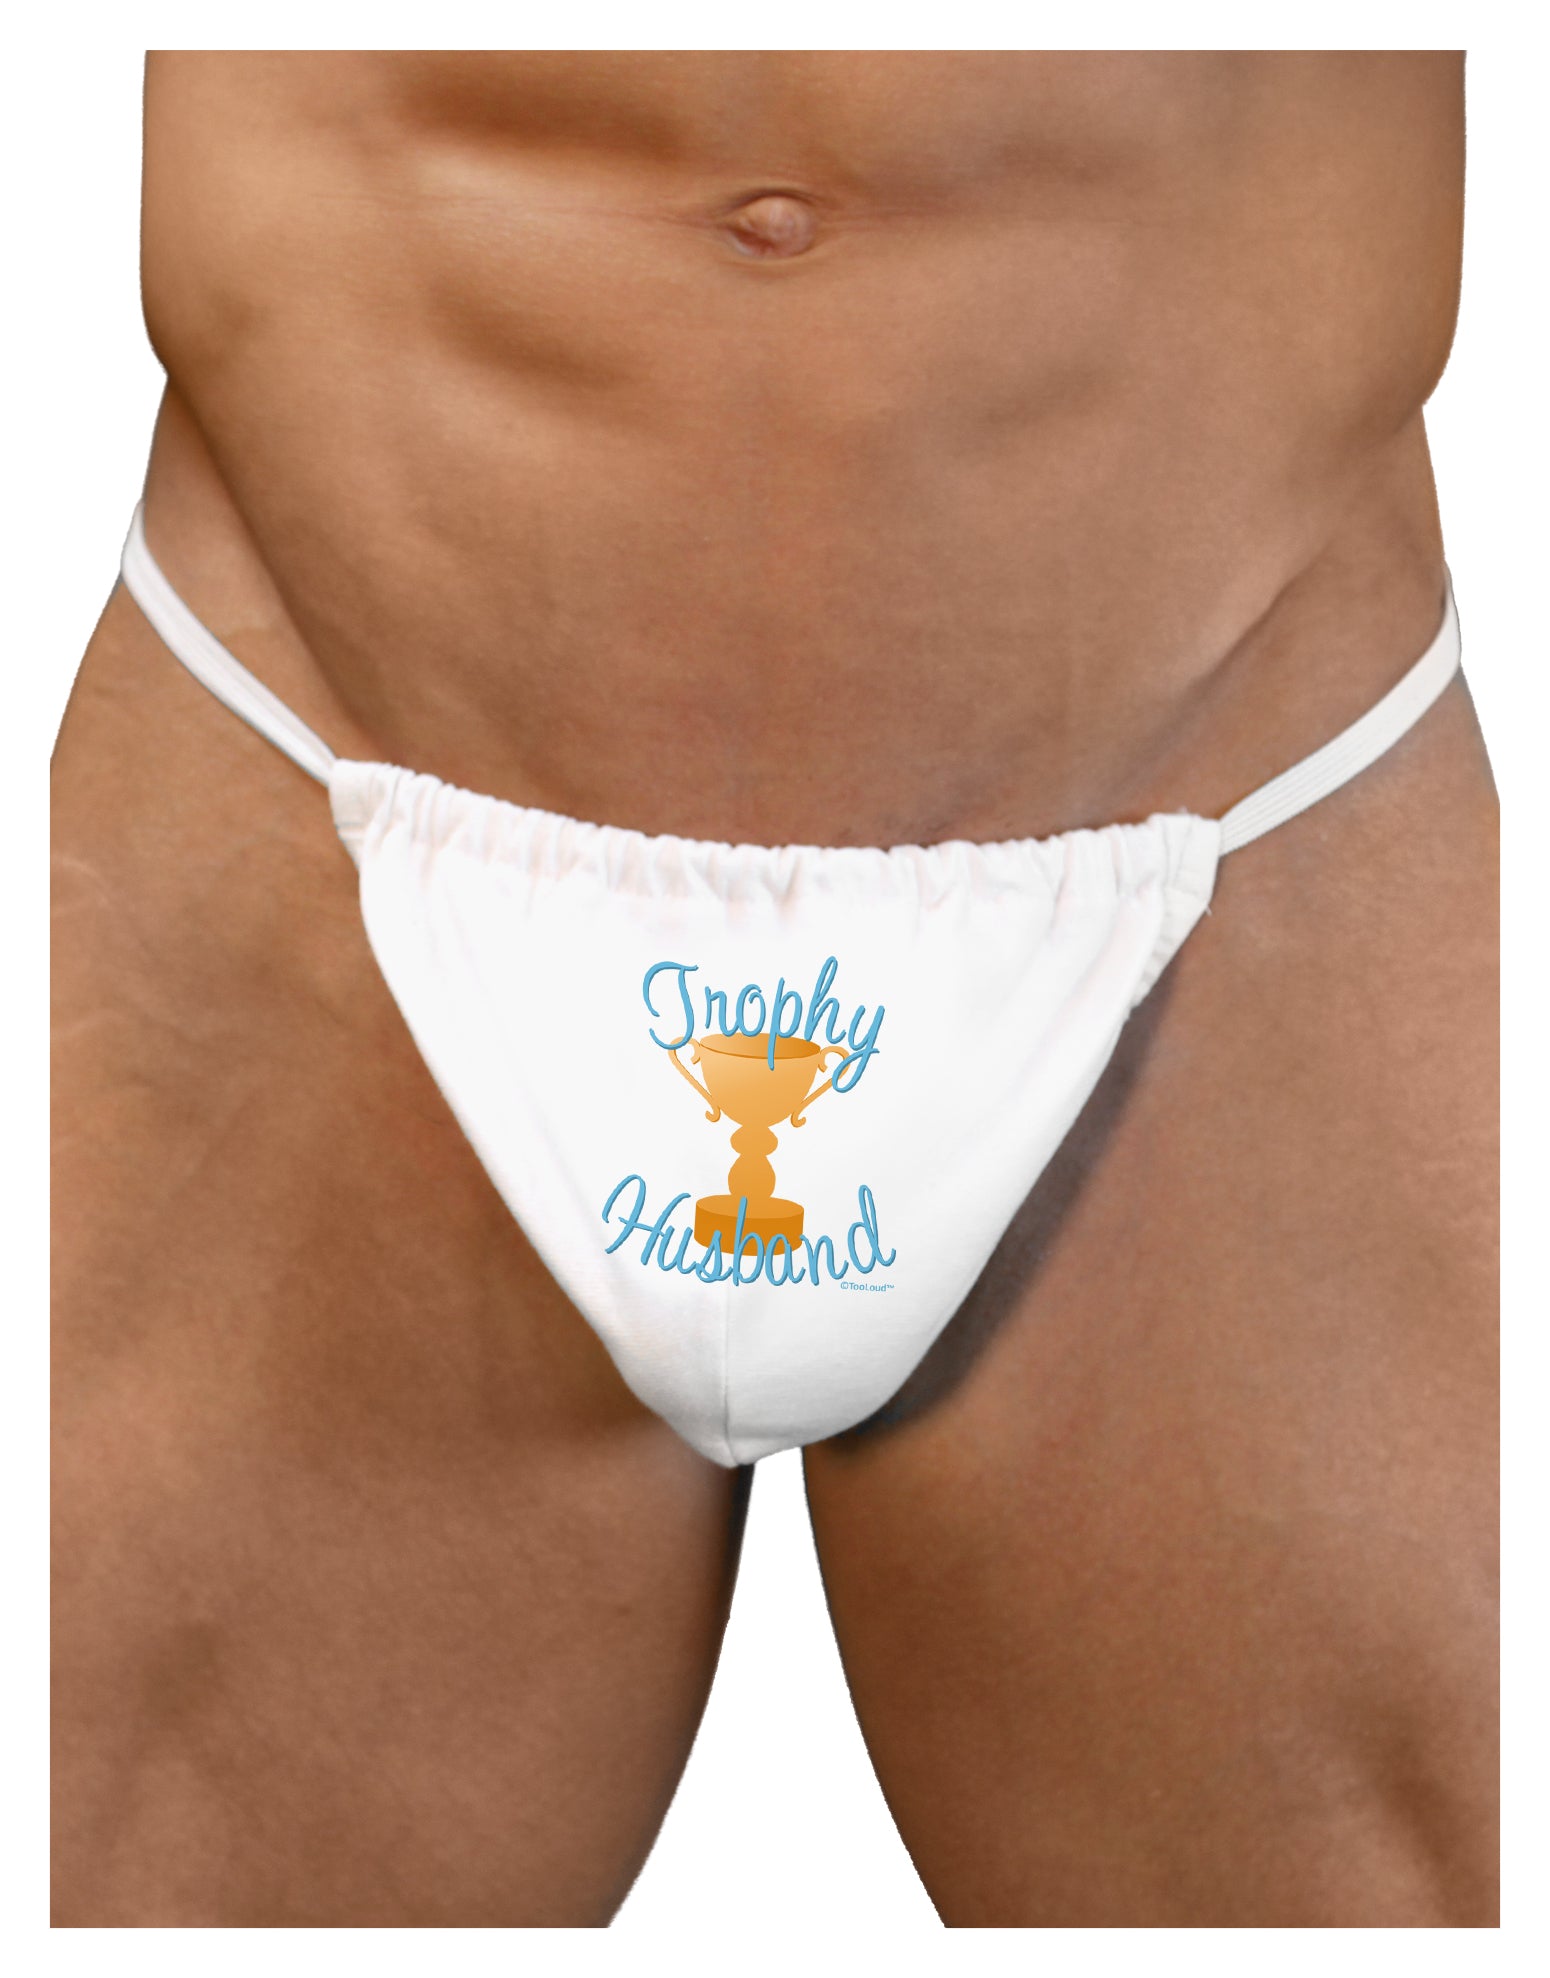 Trophy Husband Design Mens G-String Underwear by TooLoud - Davson